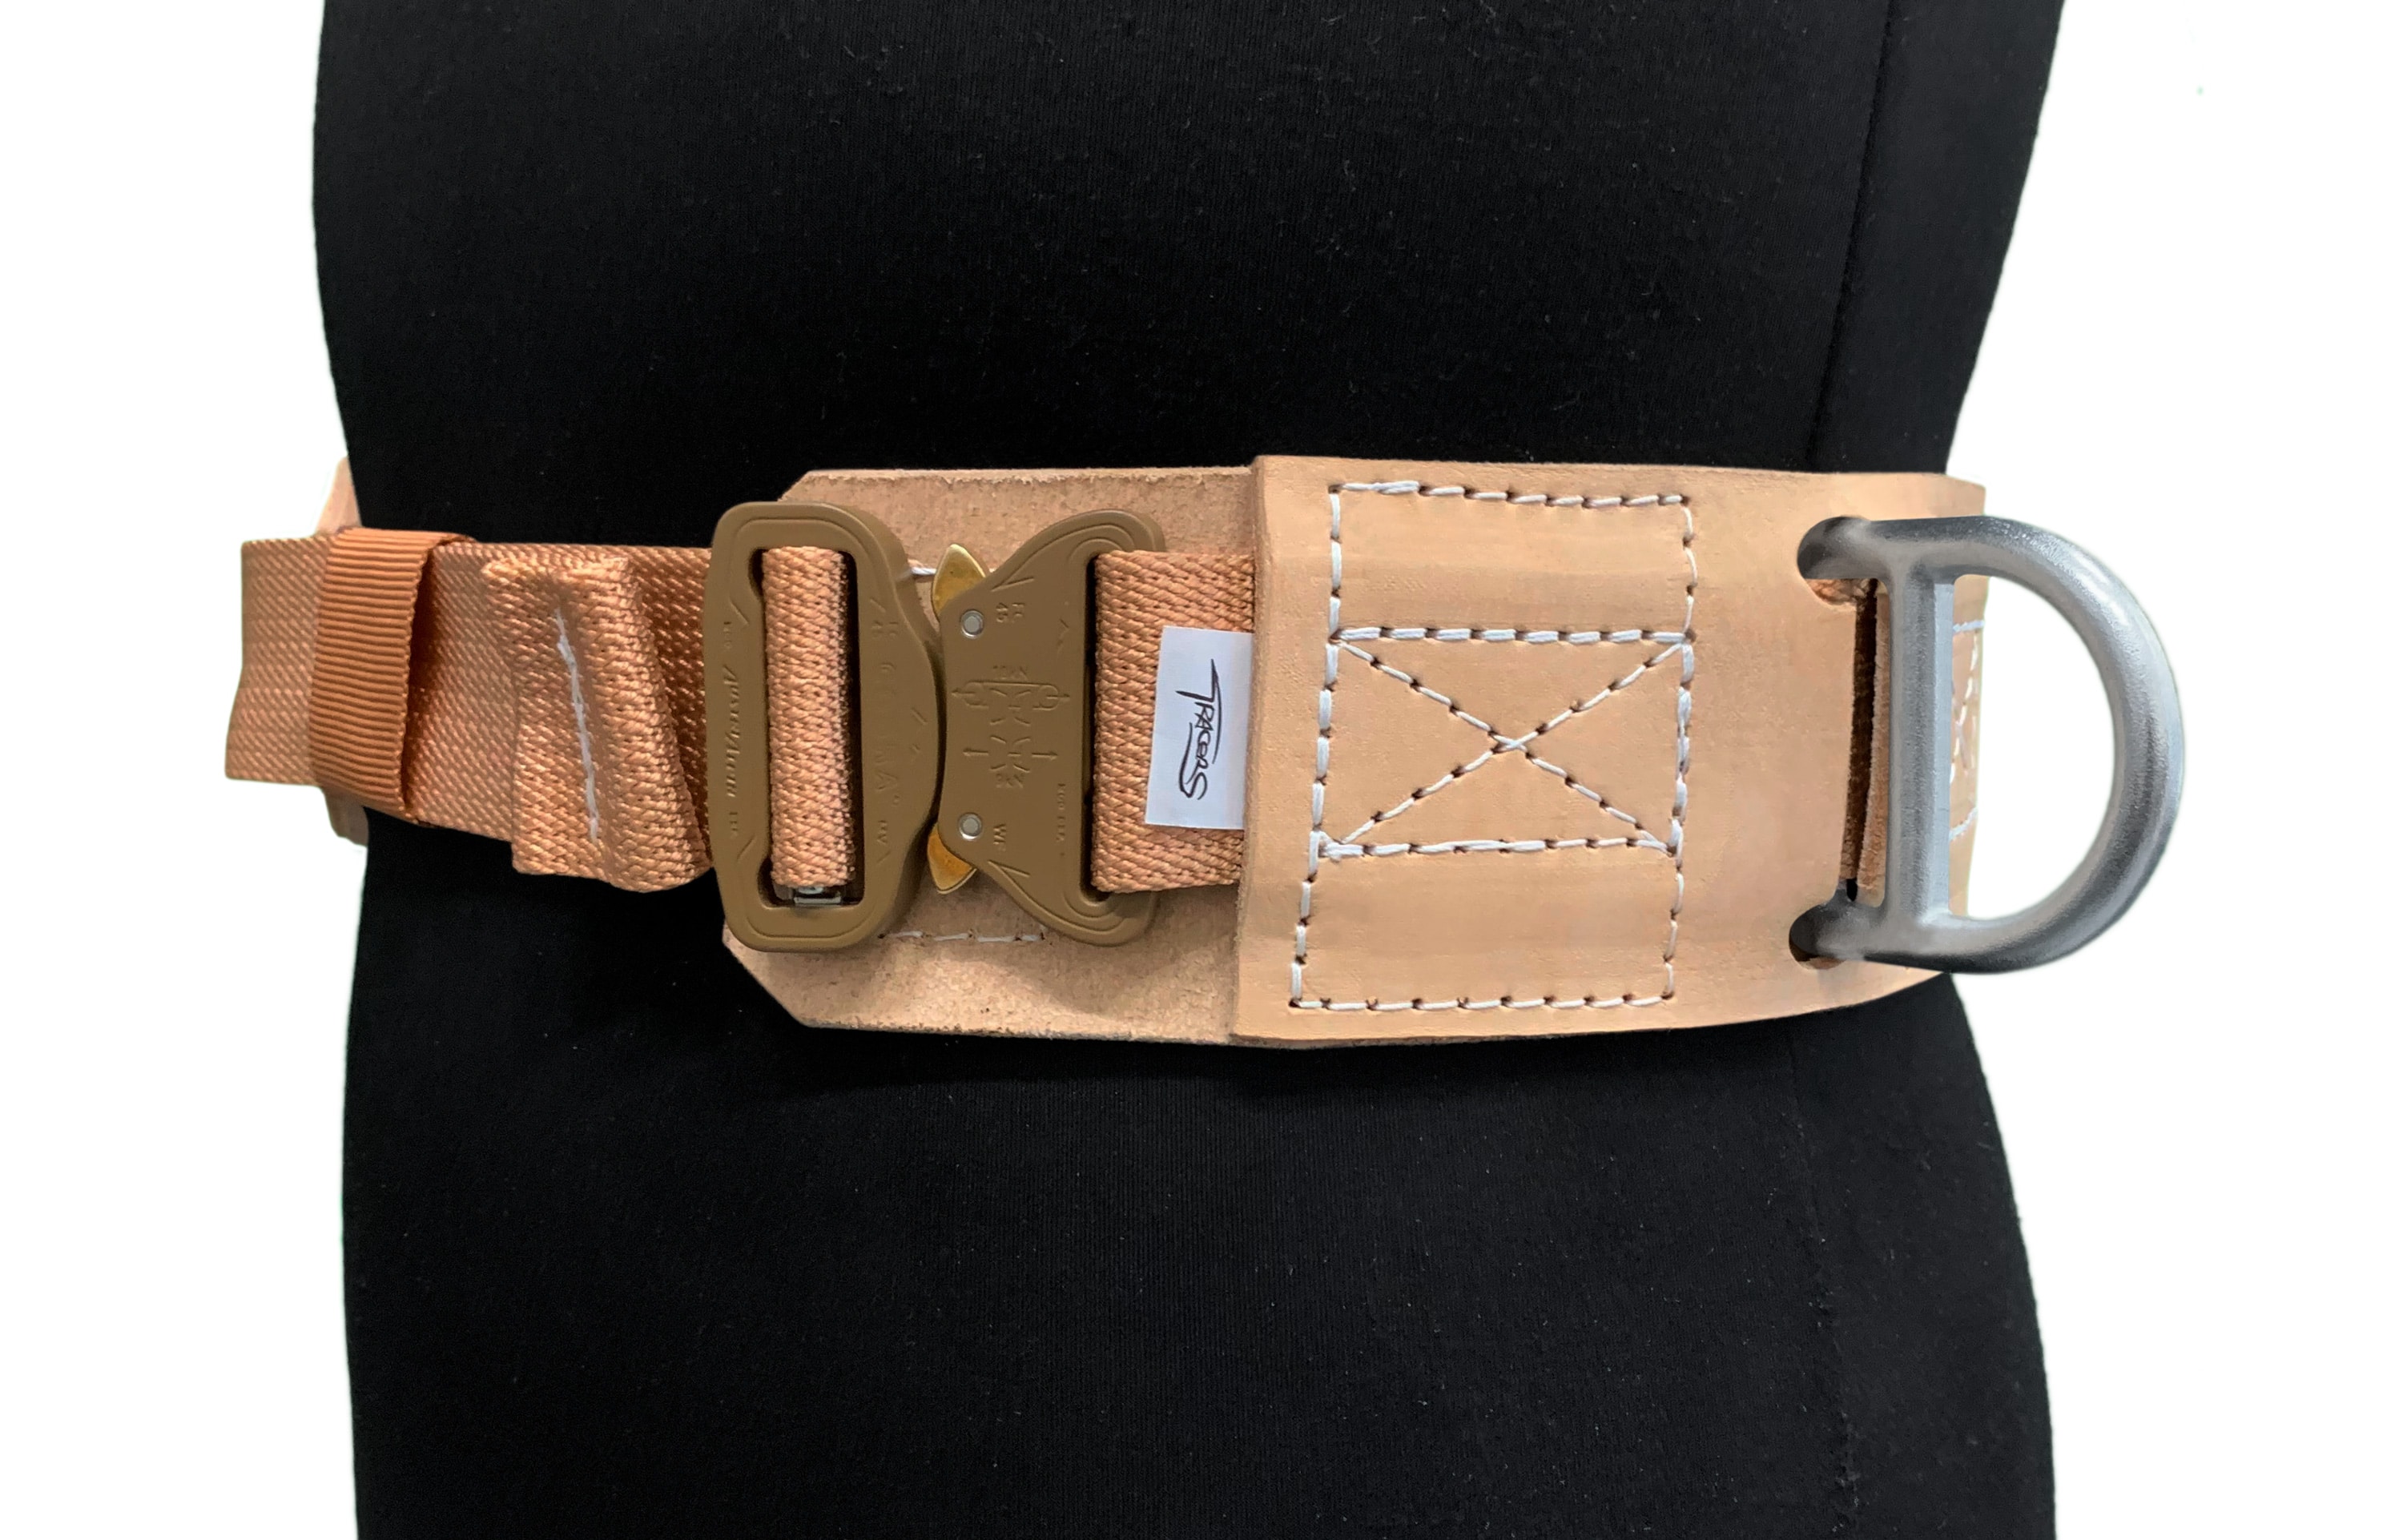 2 in 1 Practical Reise-Geldgürtel Safety Belt with Secret Buckle Full Leather 